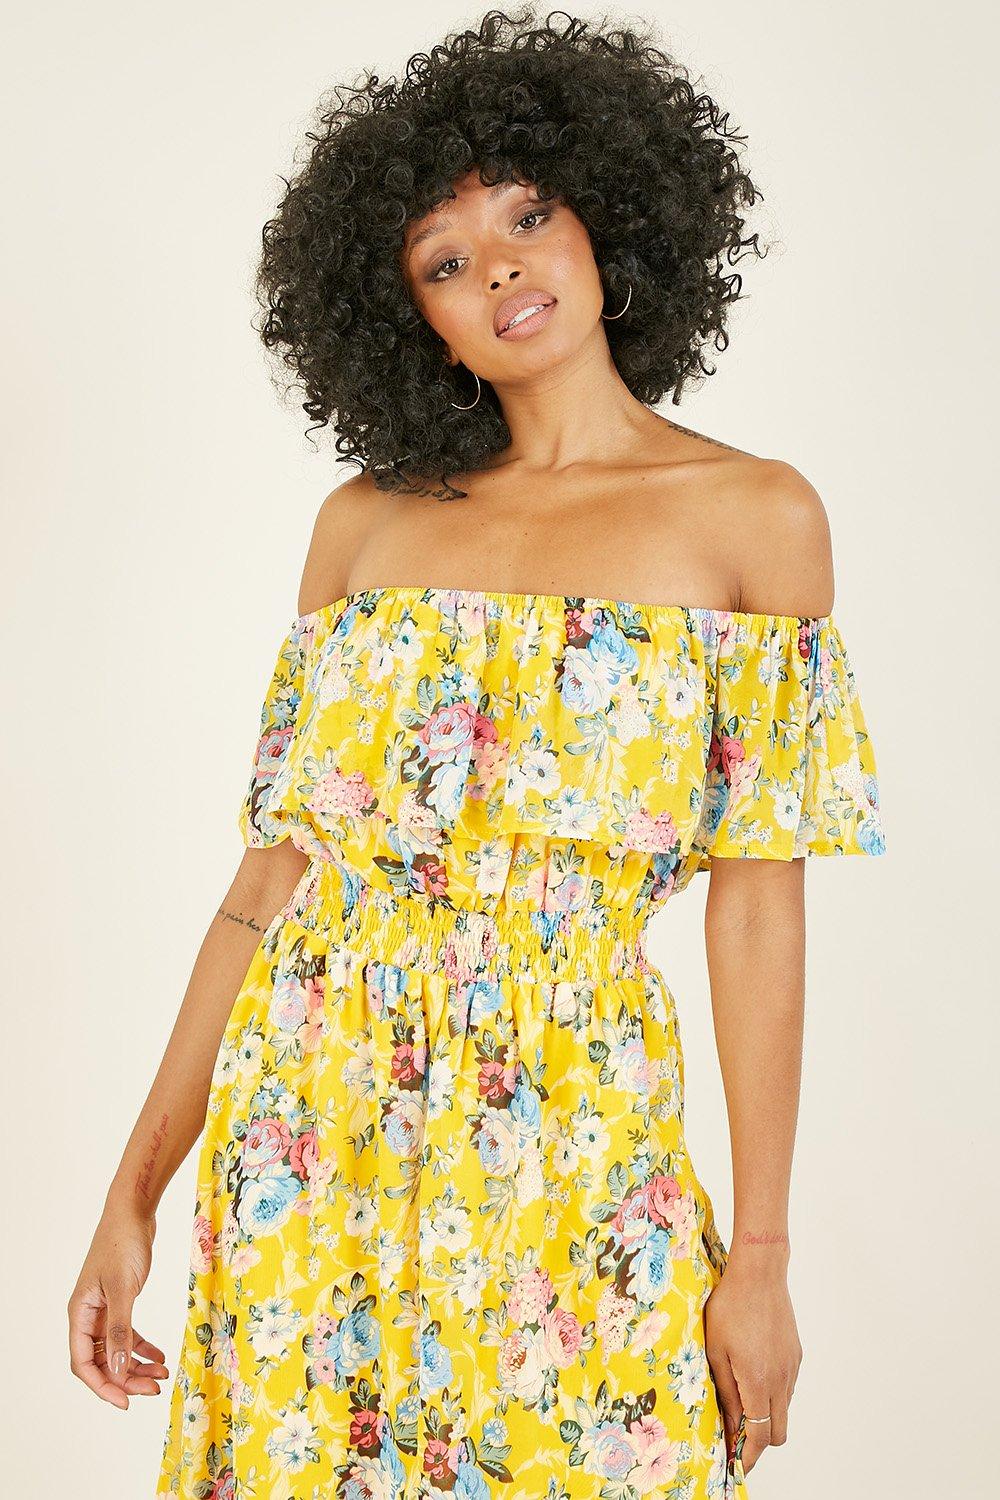 bardot summer dress uk Big sale - OFF 70%